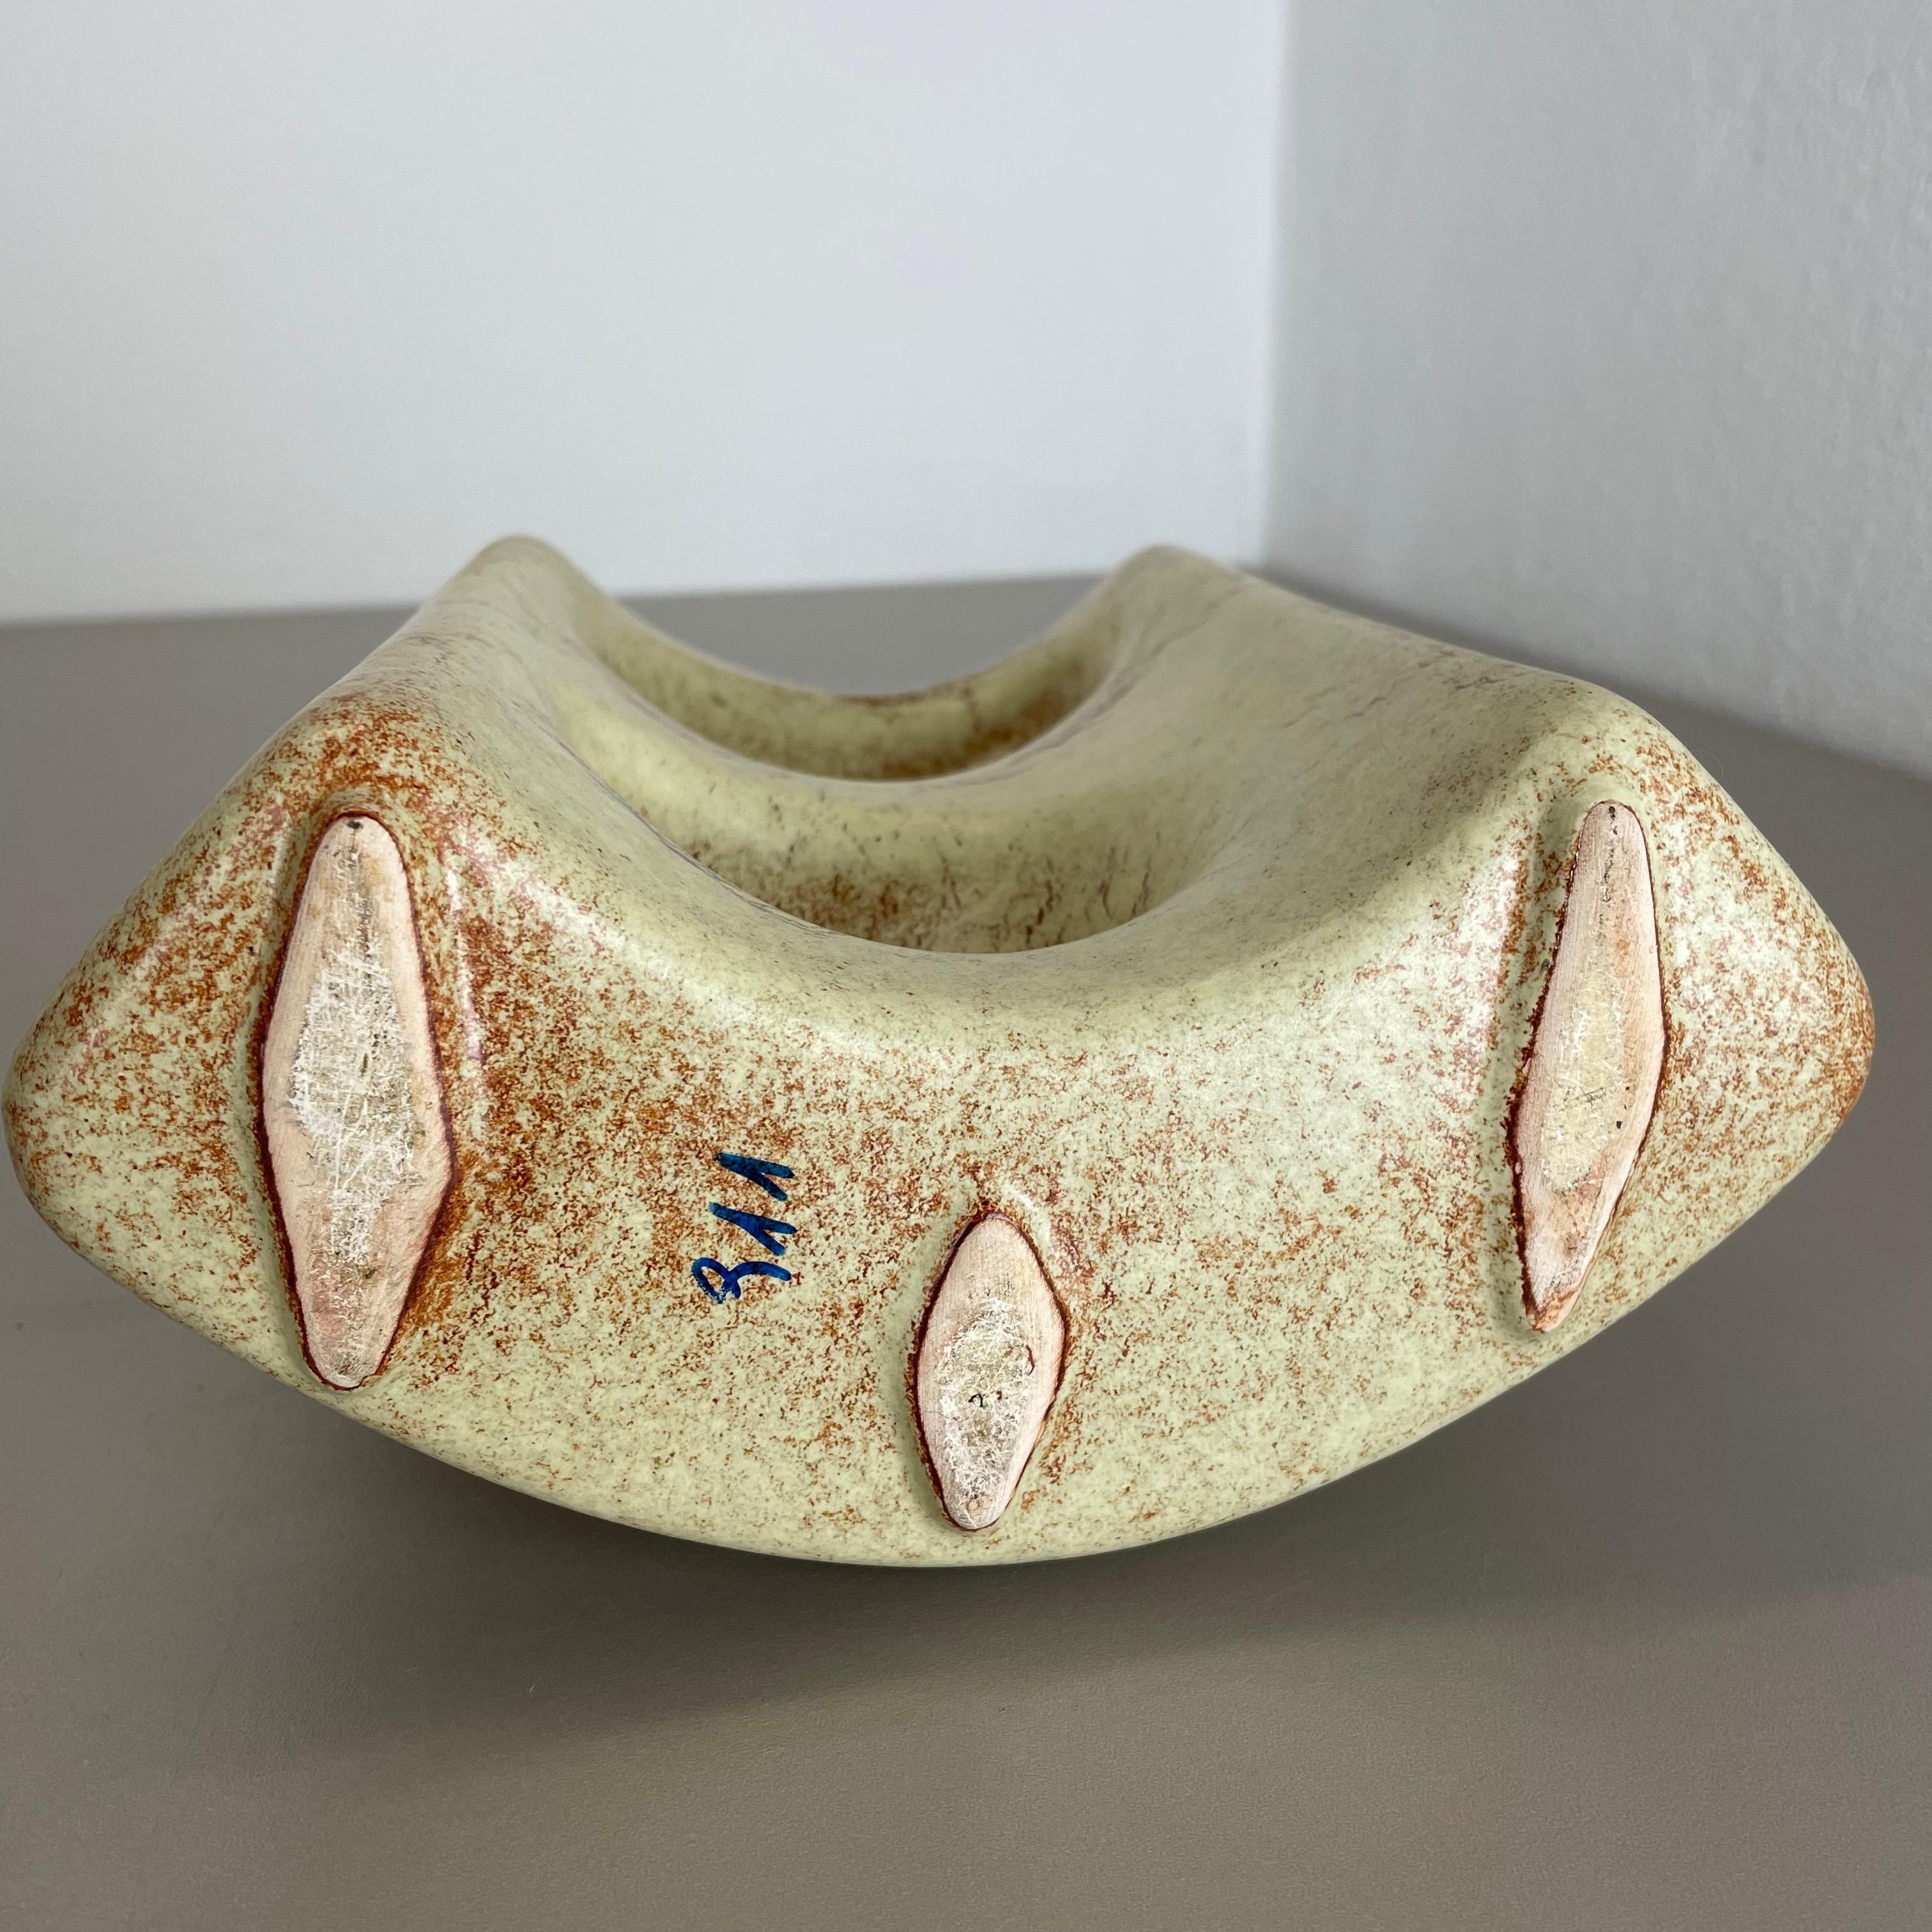 Unique Ceramic Studio Pottery Vase by Bertoncello Schiavon Ceramics, Italy 1970s For Sale 11